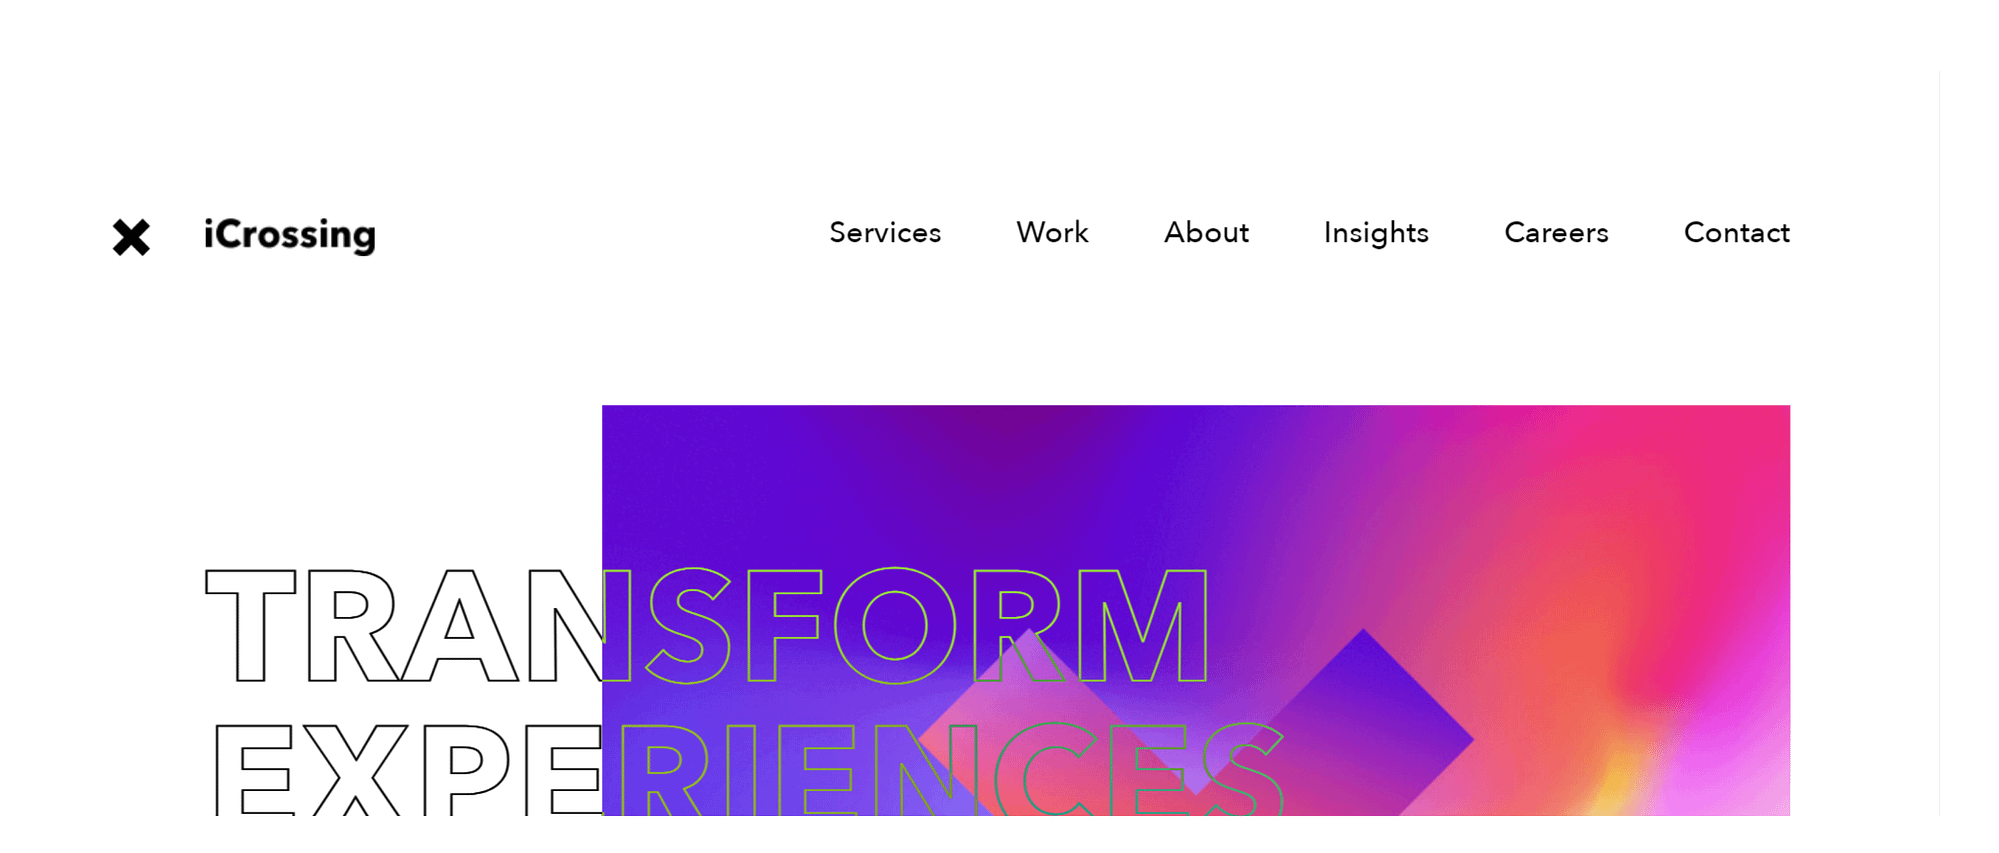 iCrossing Homepage